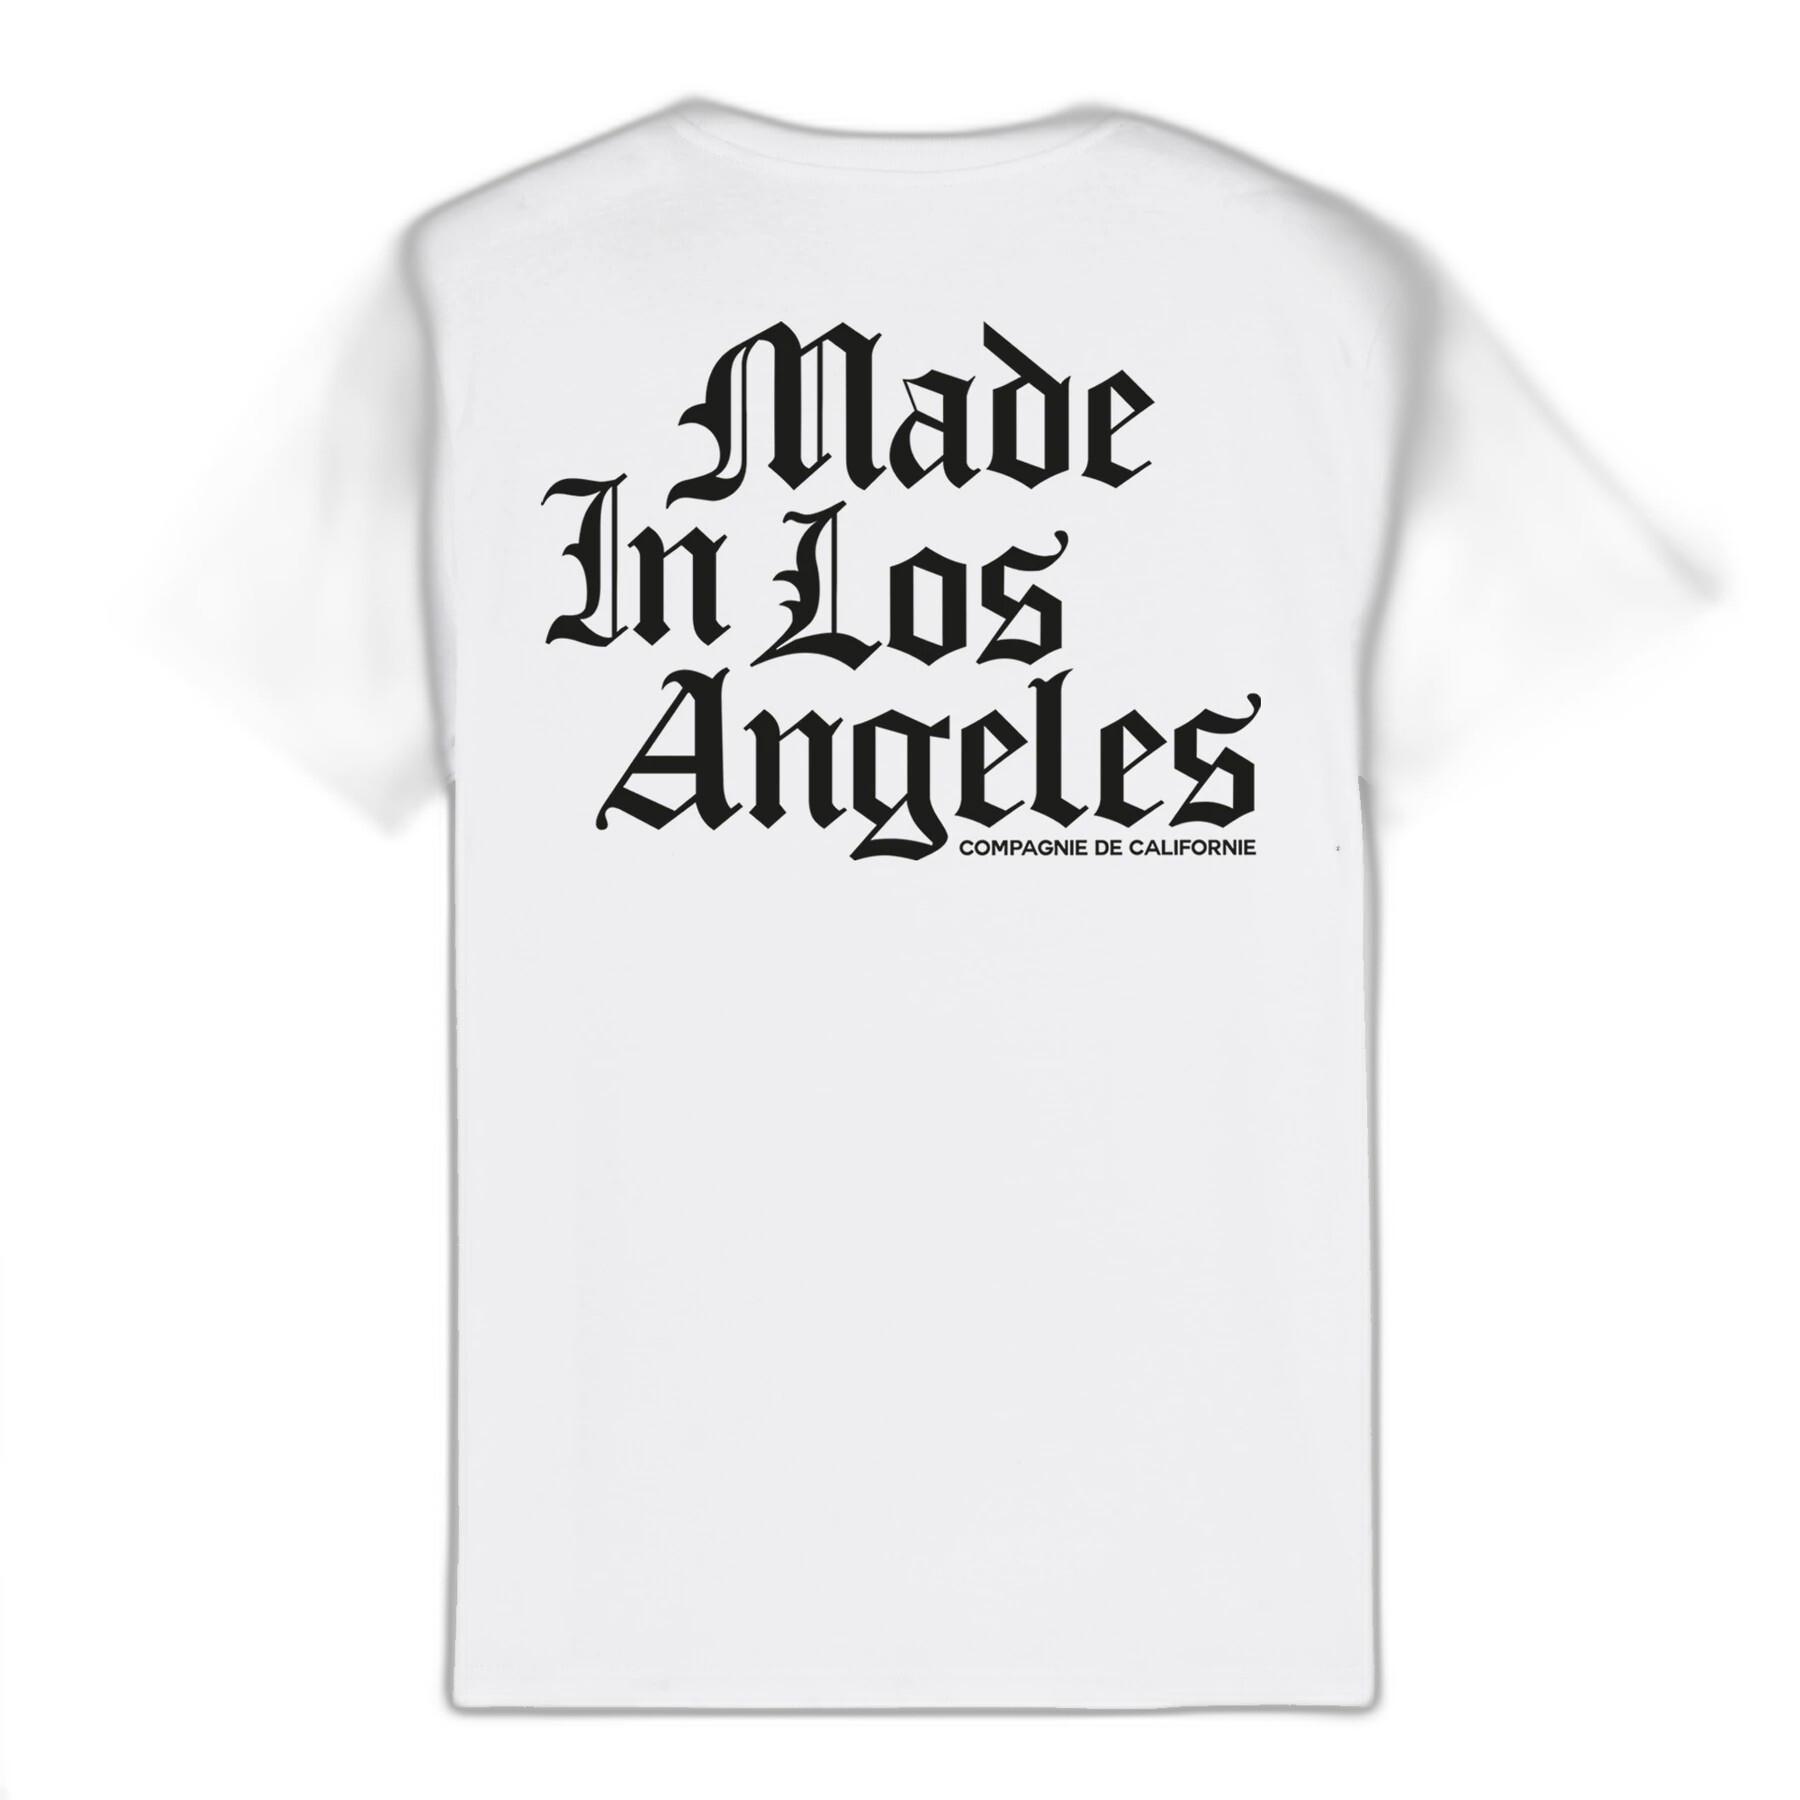 T-shirt Compagnie de Californie Made in LA